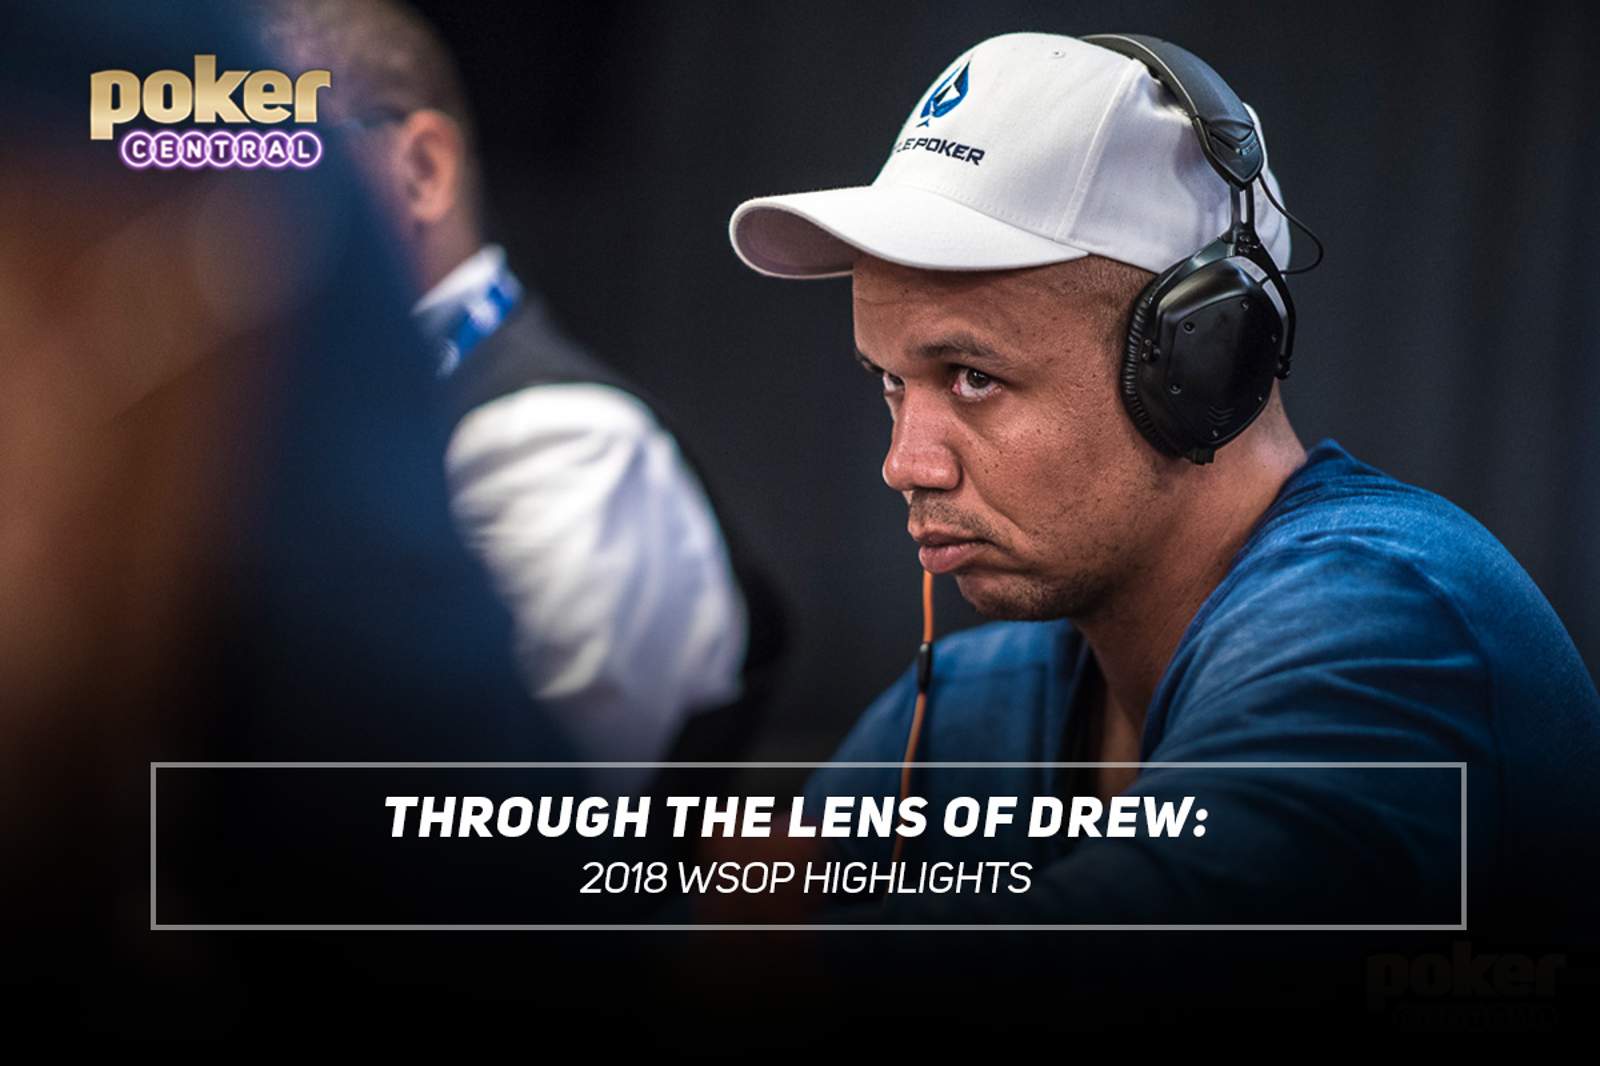 Through The Lens of Drew - 2018 WSOP Highlights